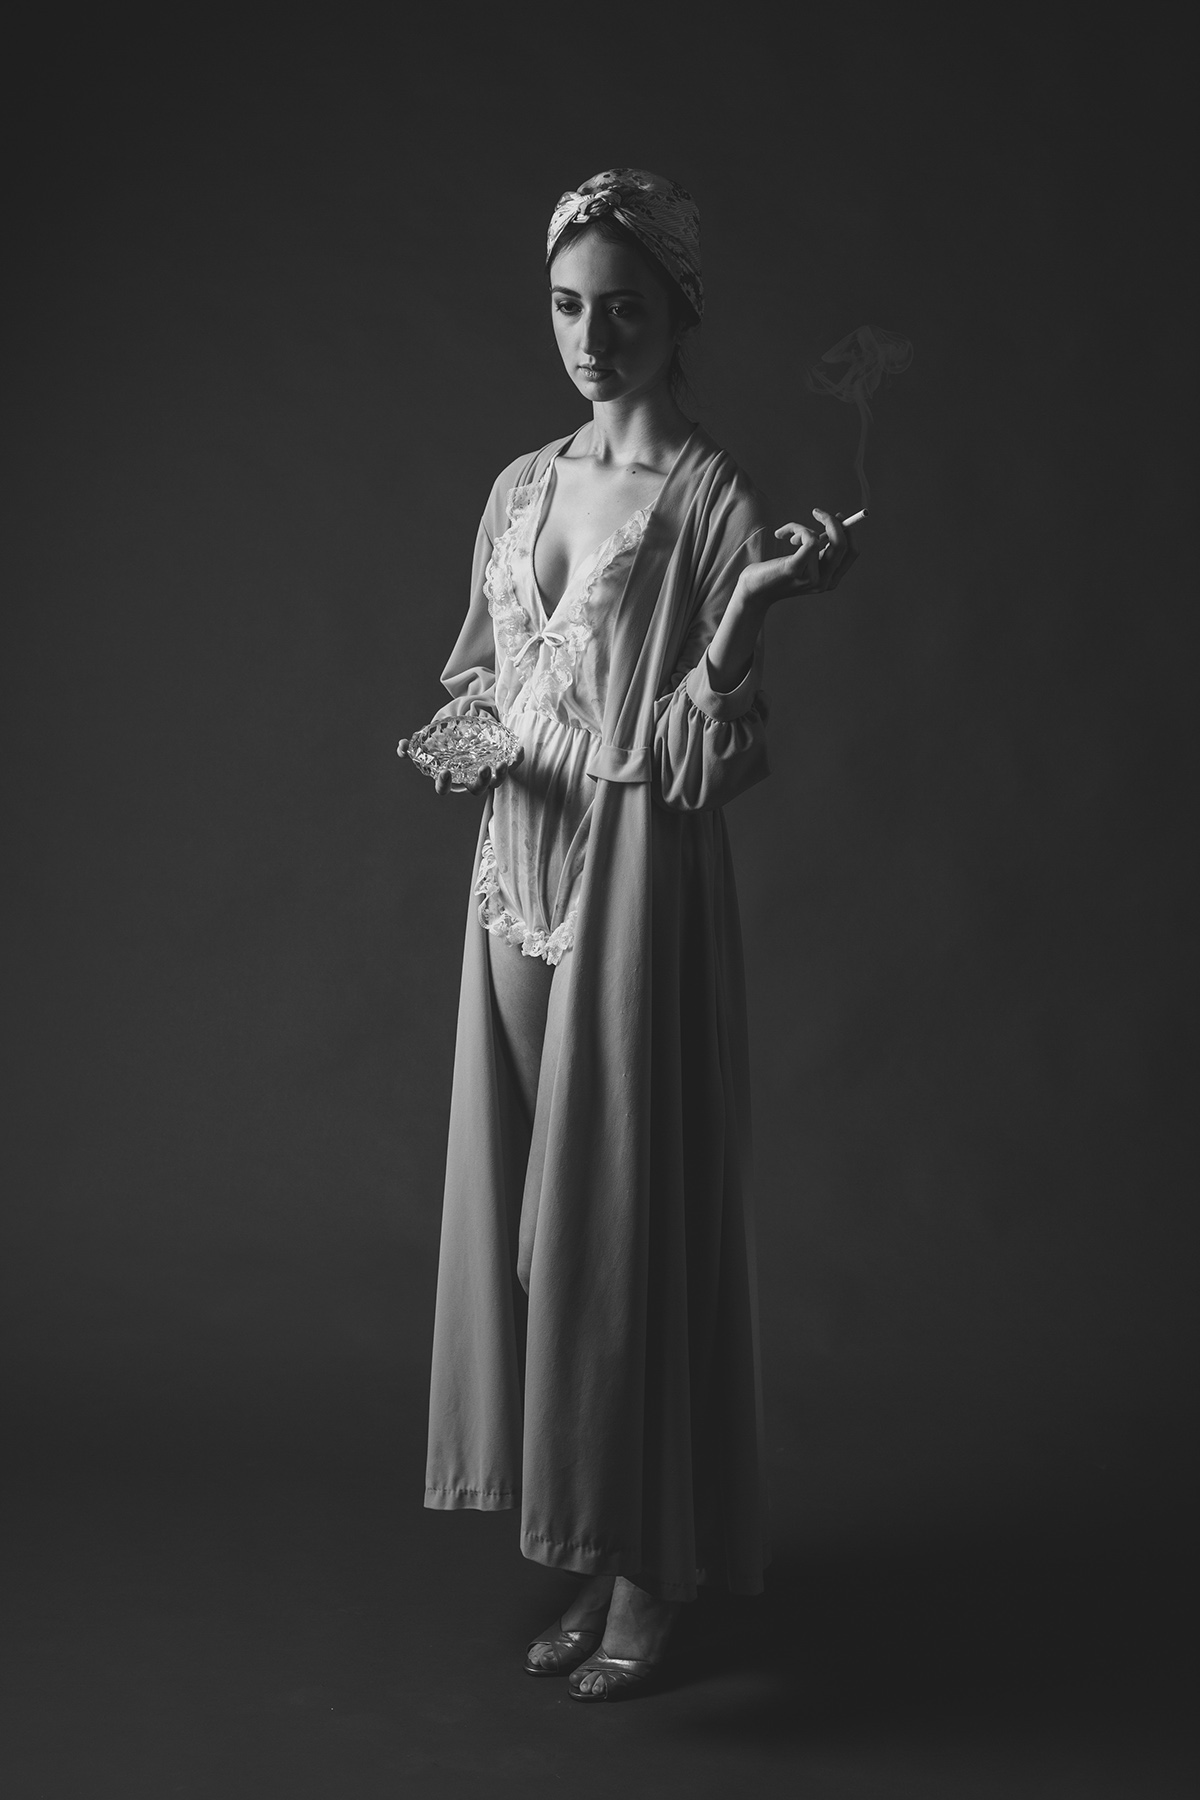 light lighting studio art model vintage Clothing digital girl woman black and white color editorial portraits night